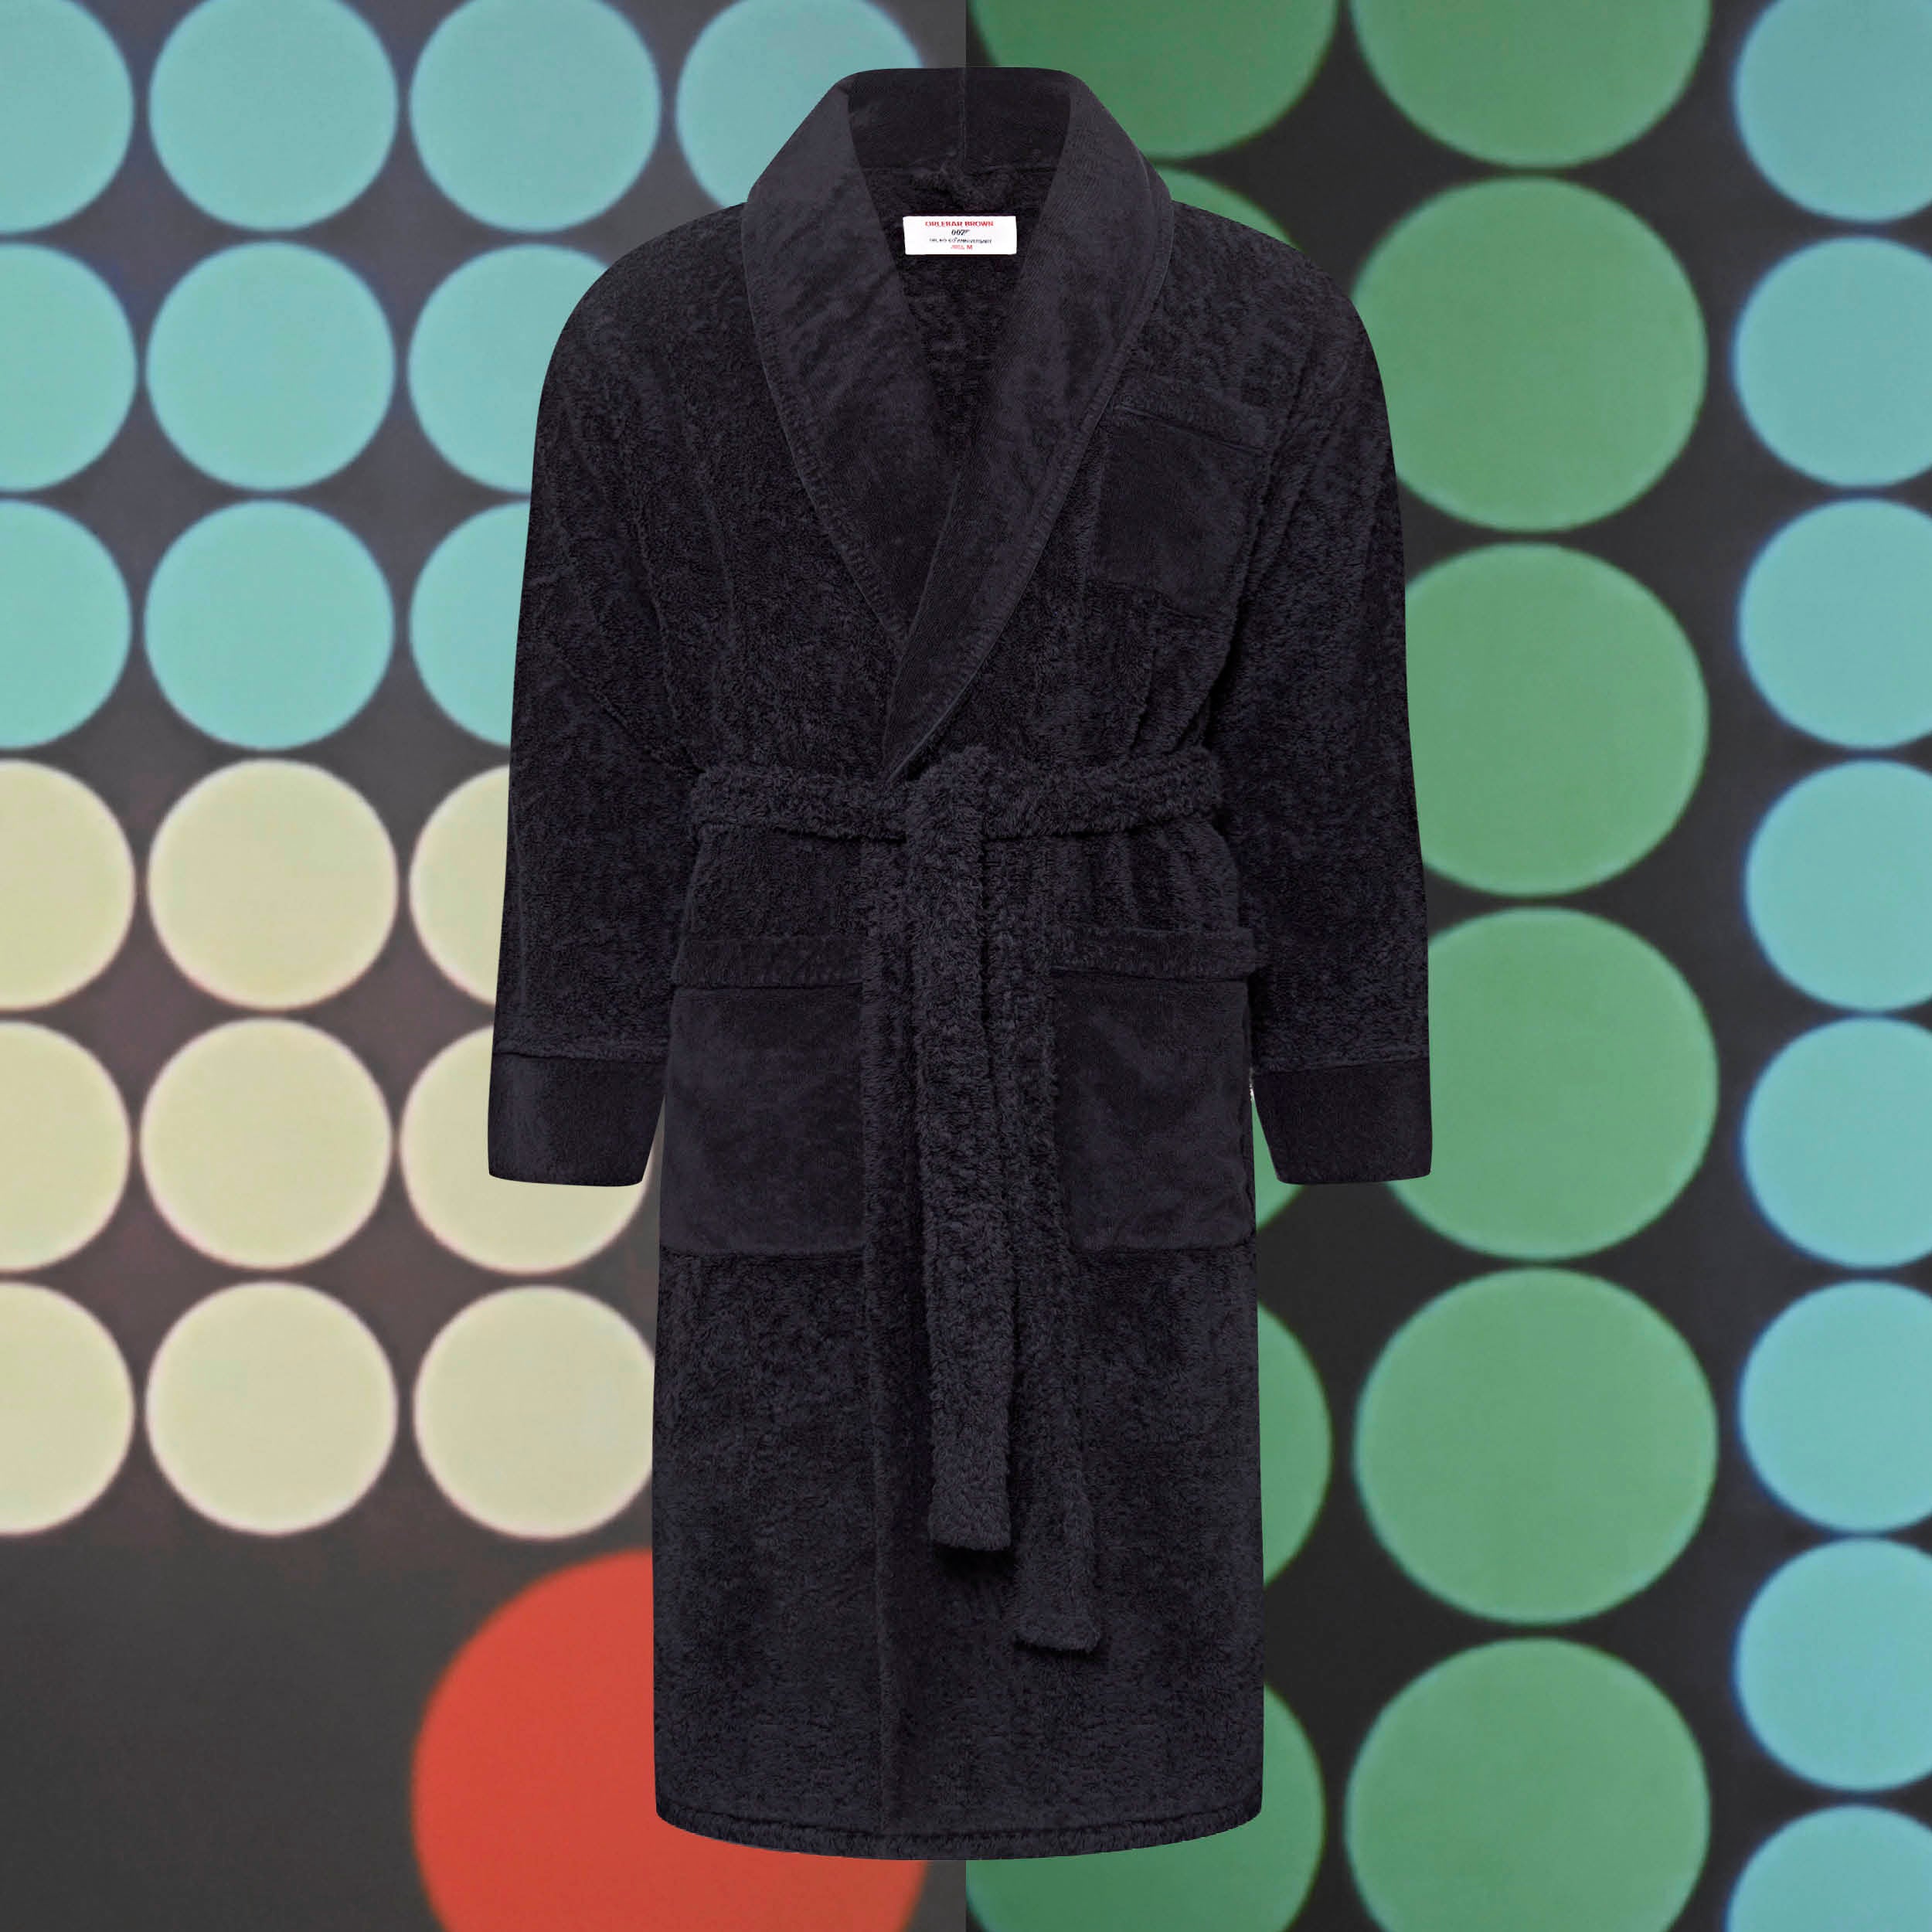 Louis Vuitton Geometric Towelling Short Robe